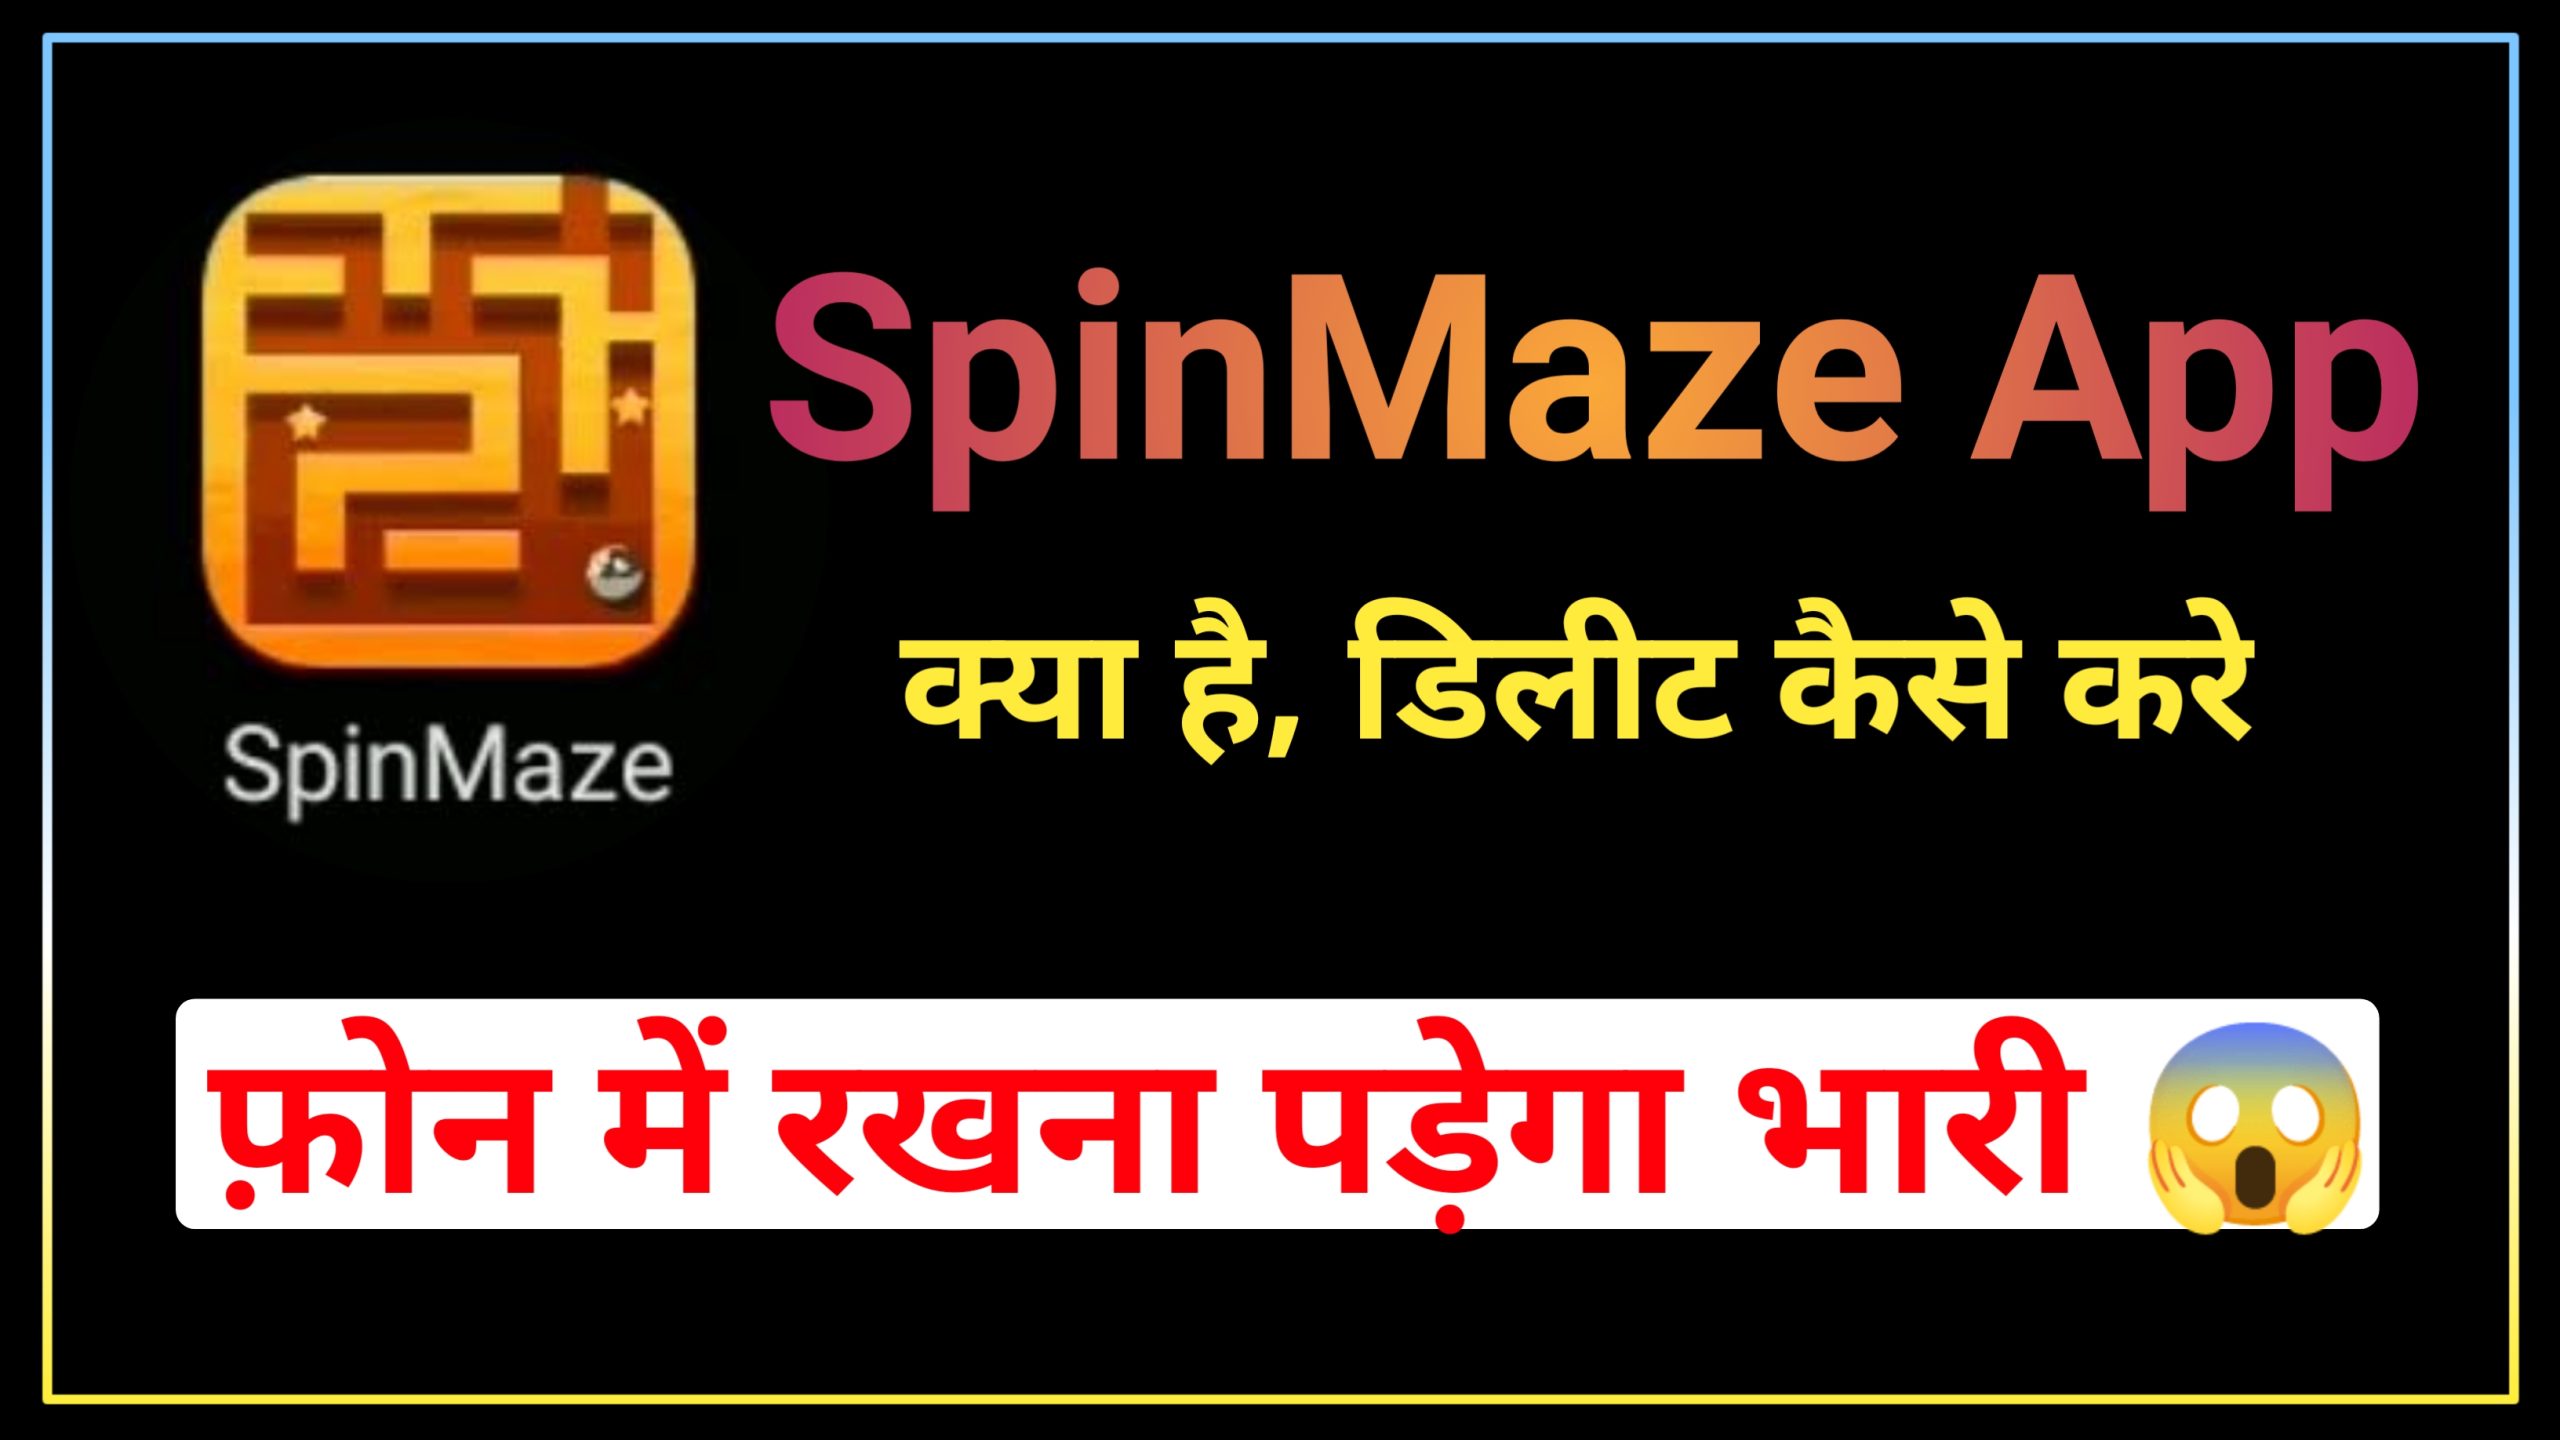 SpinMaze App Kya Hai, Delete Kaise Kare | How to Delete SpinMaze App